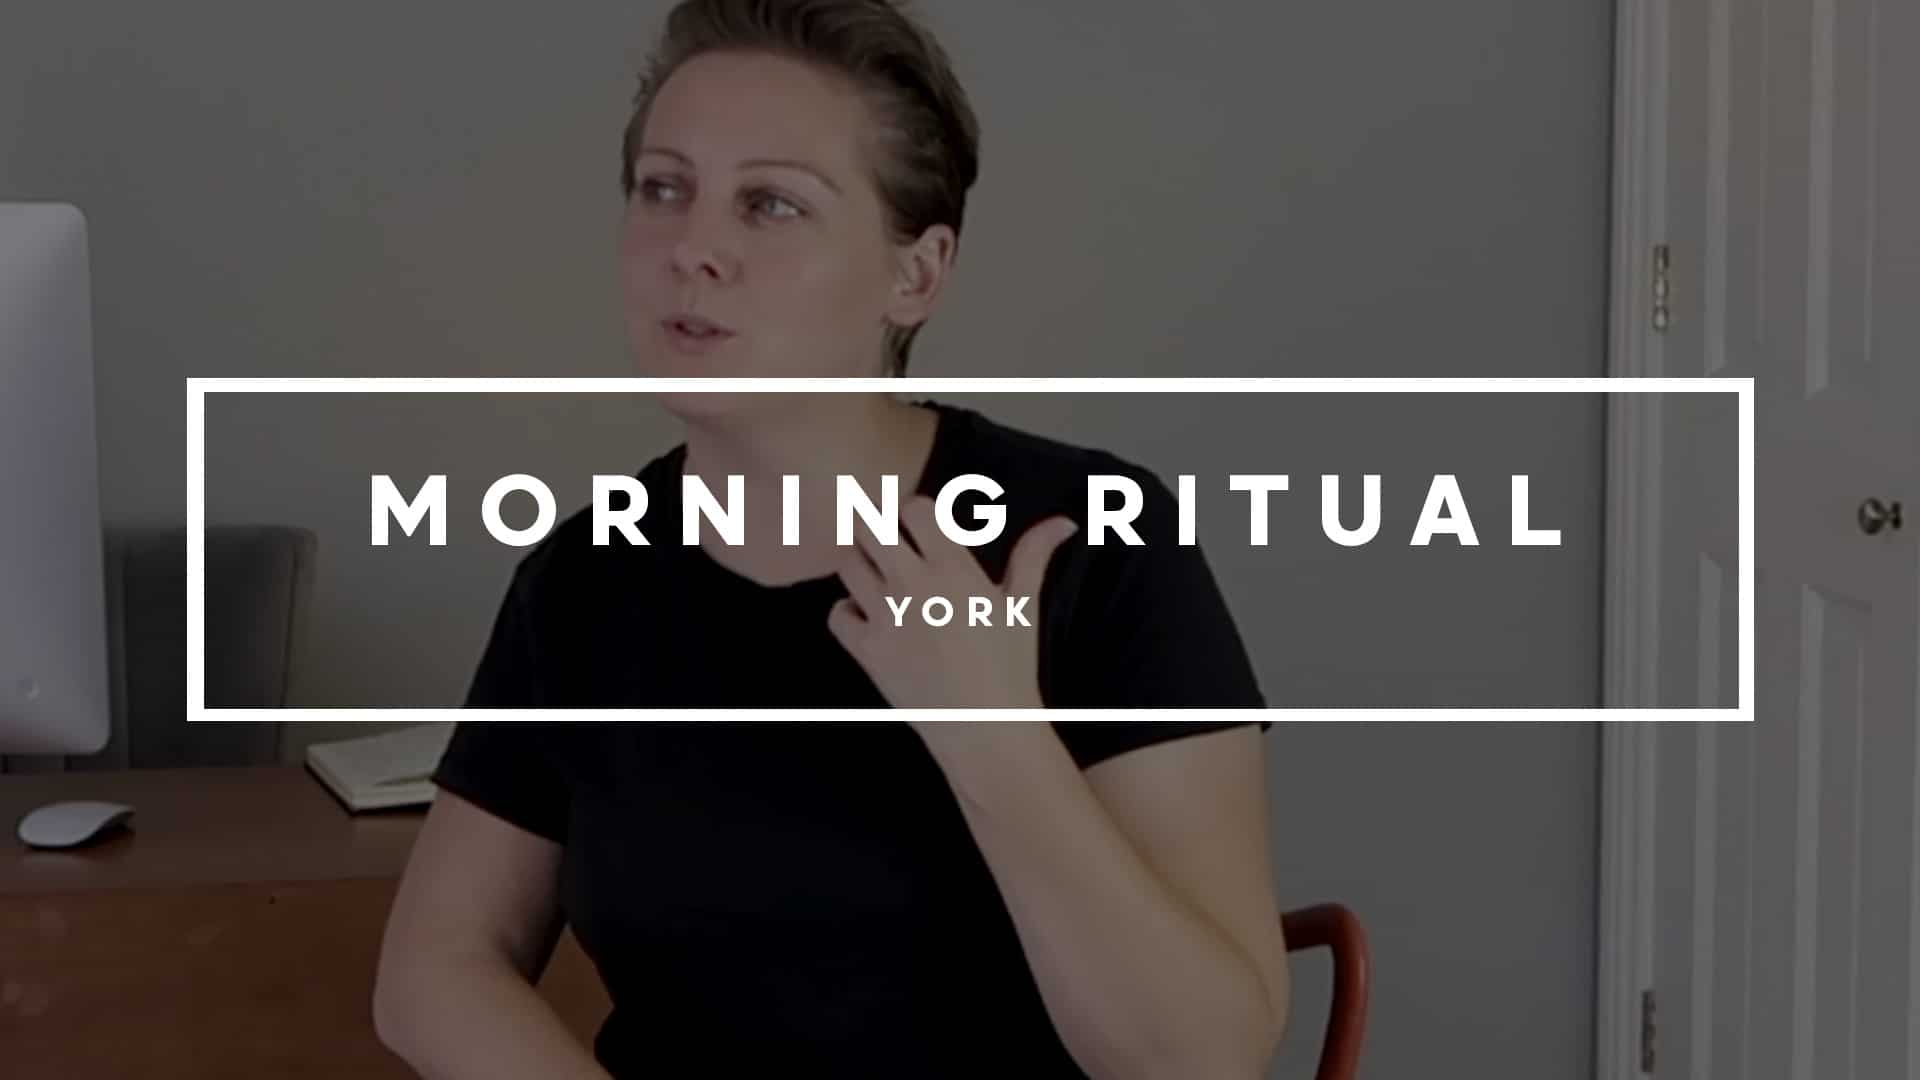 Change your life morning ritual